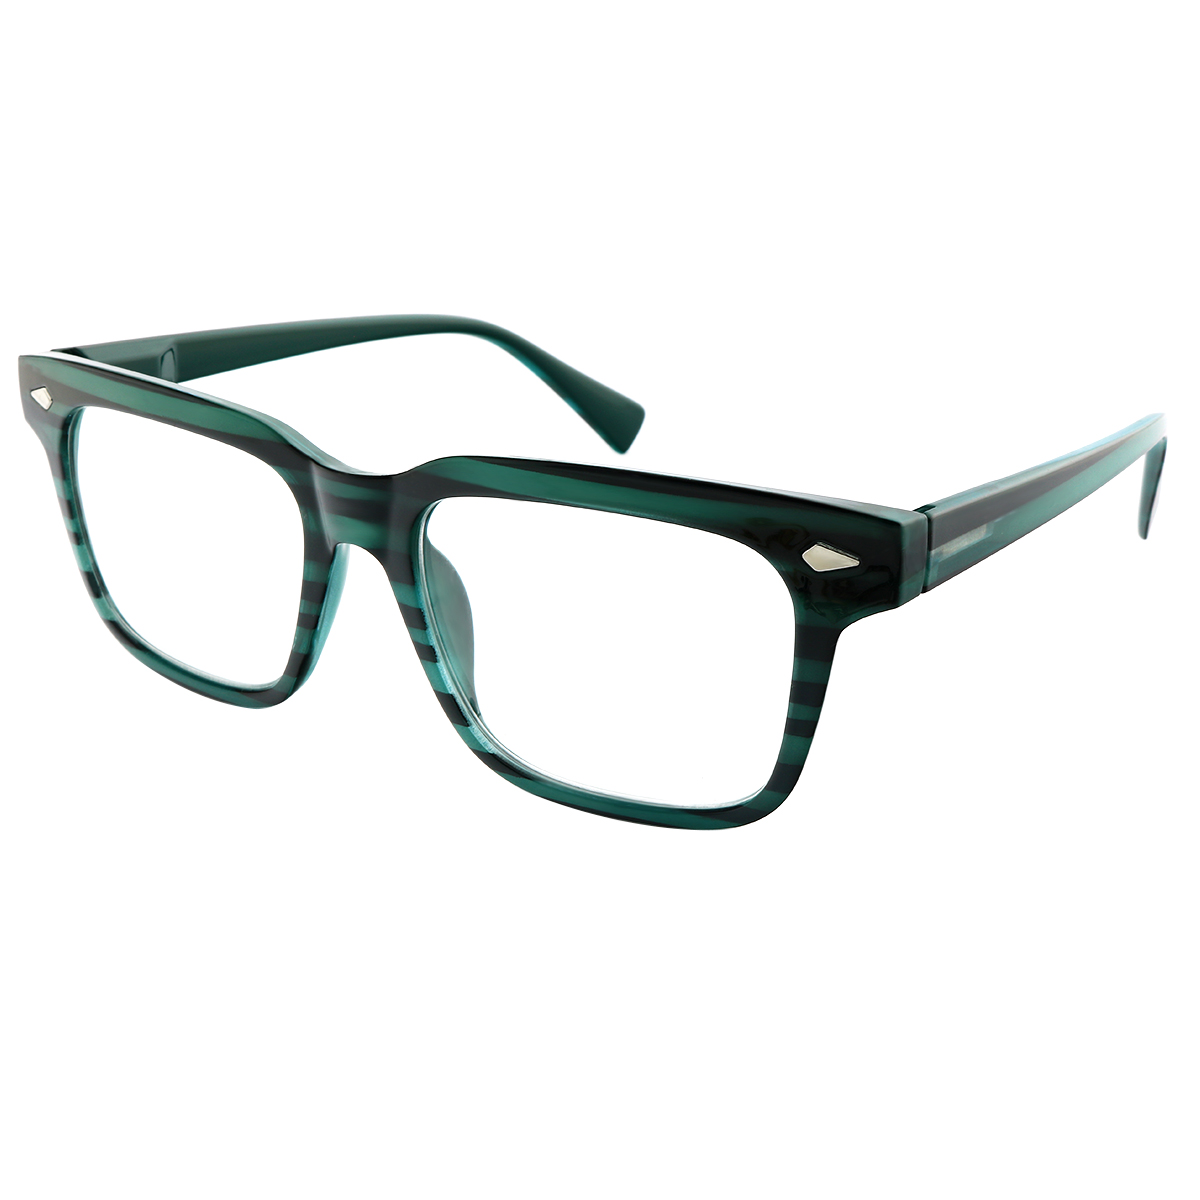 Mazaka - Square Green Reading Glasses for Men